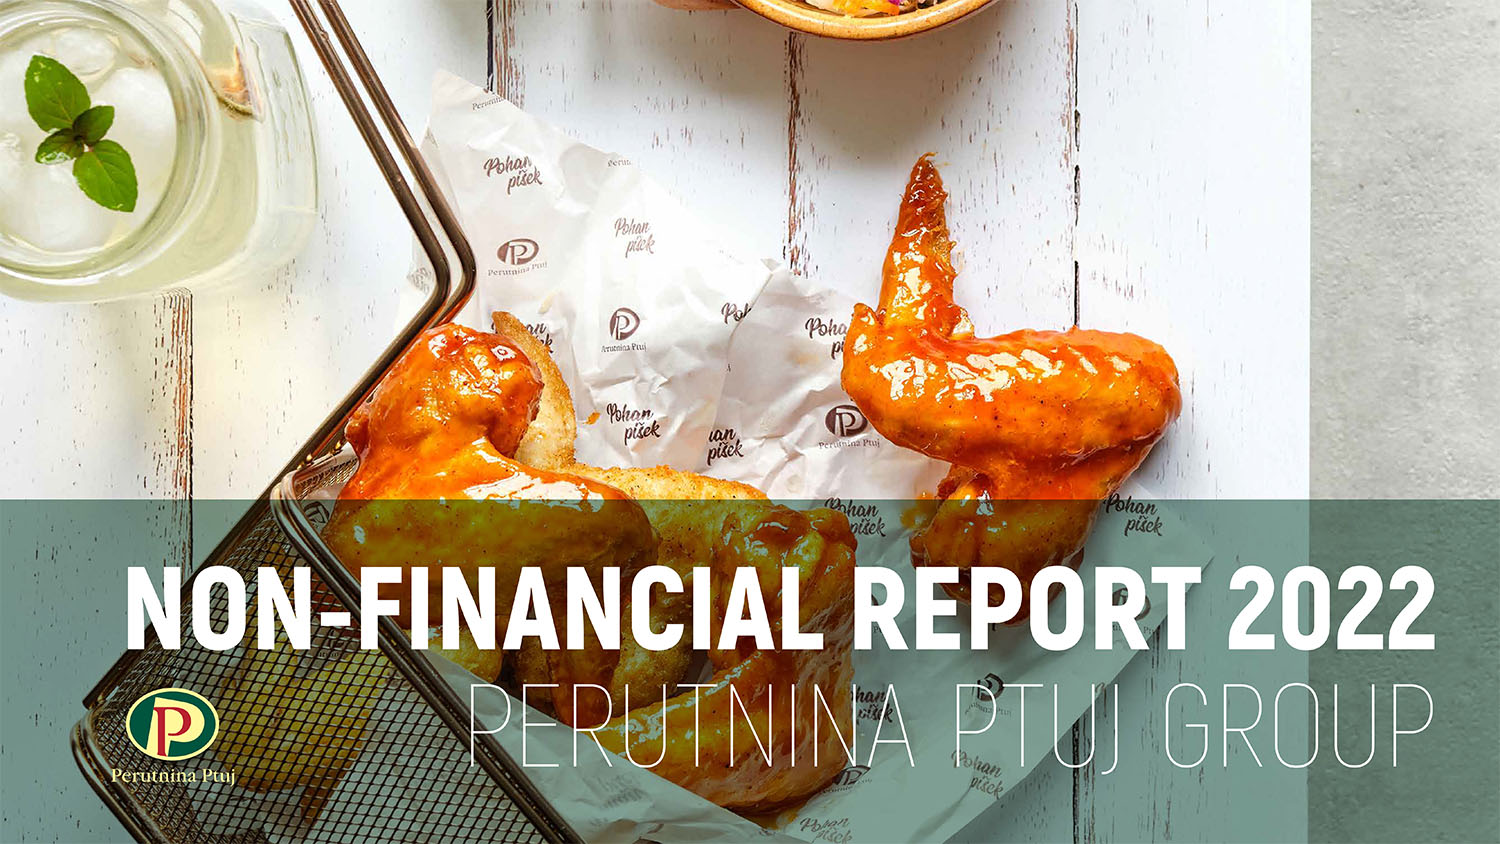 NON-FINANCIAL REPORT 2022, PERUTNINA PTUJ GROUP, cover page